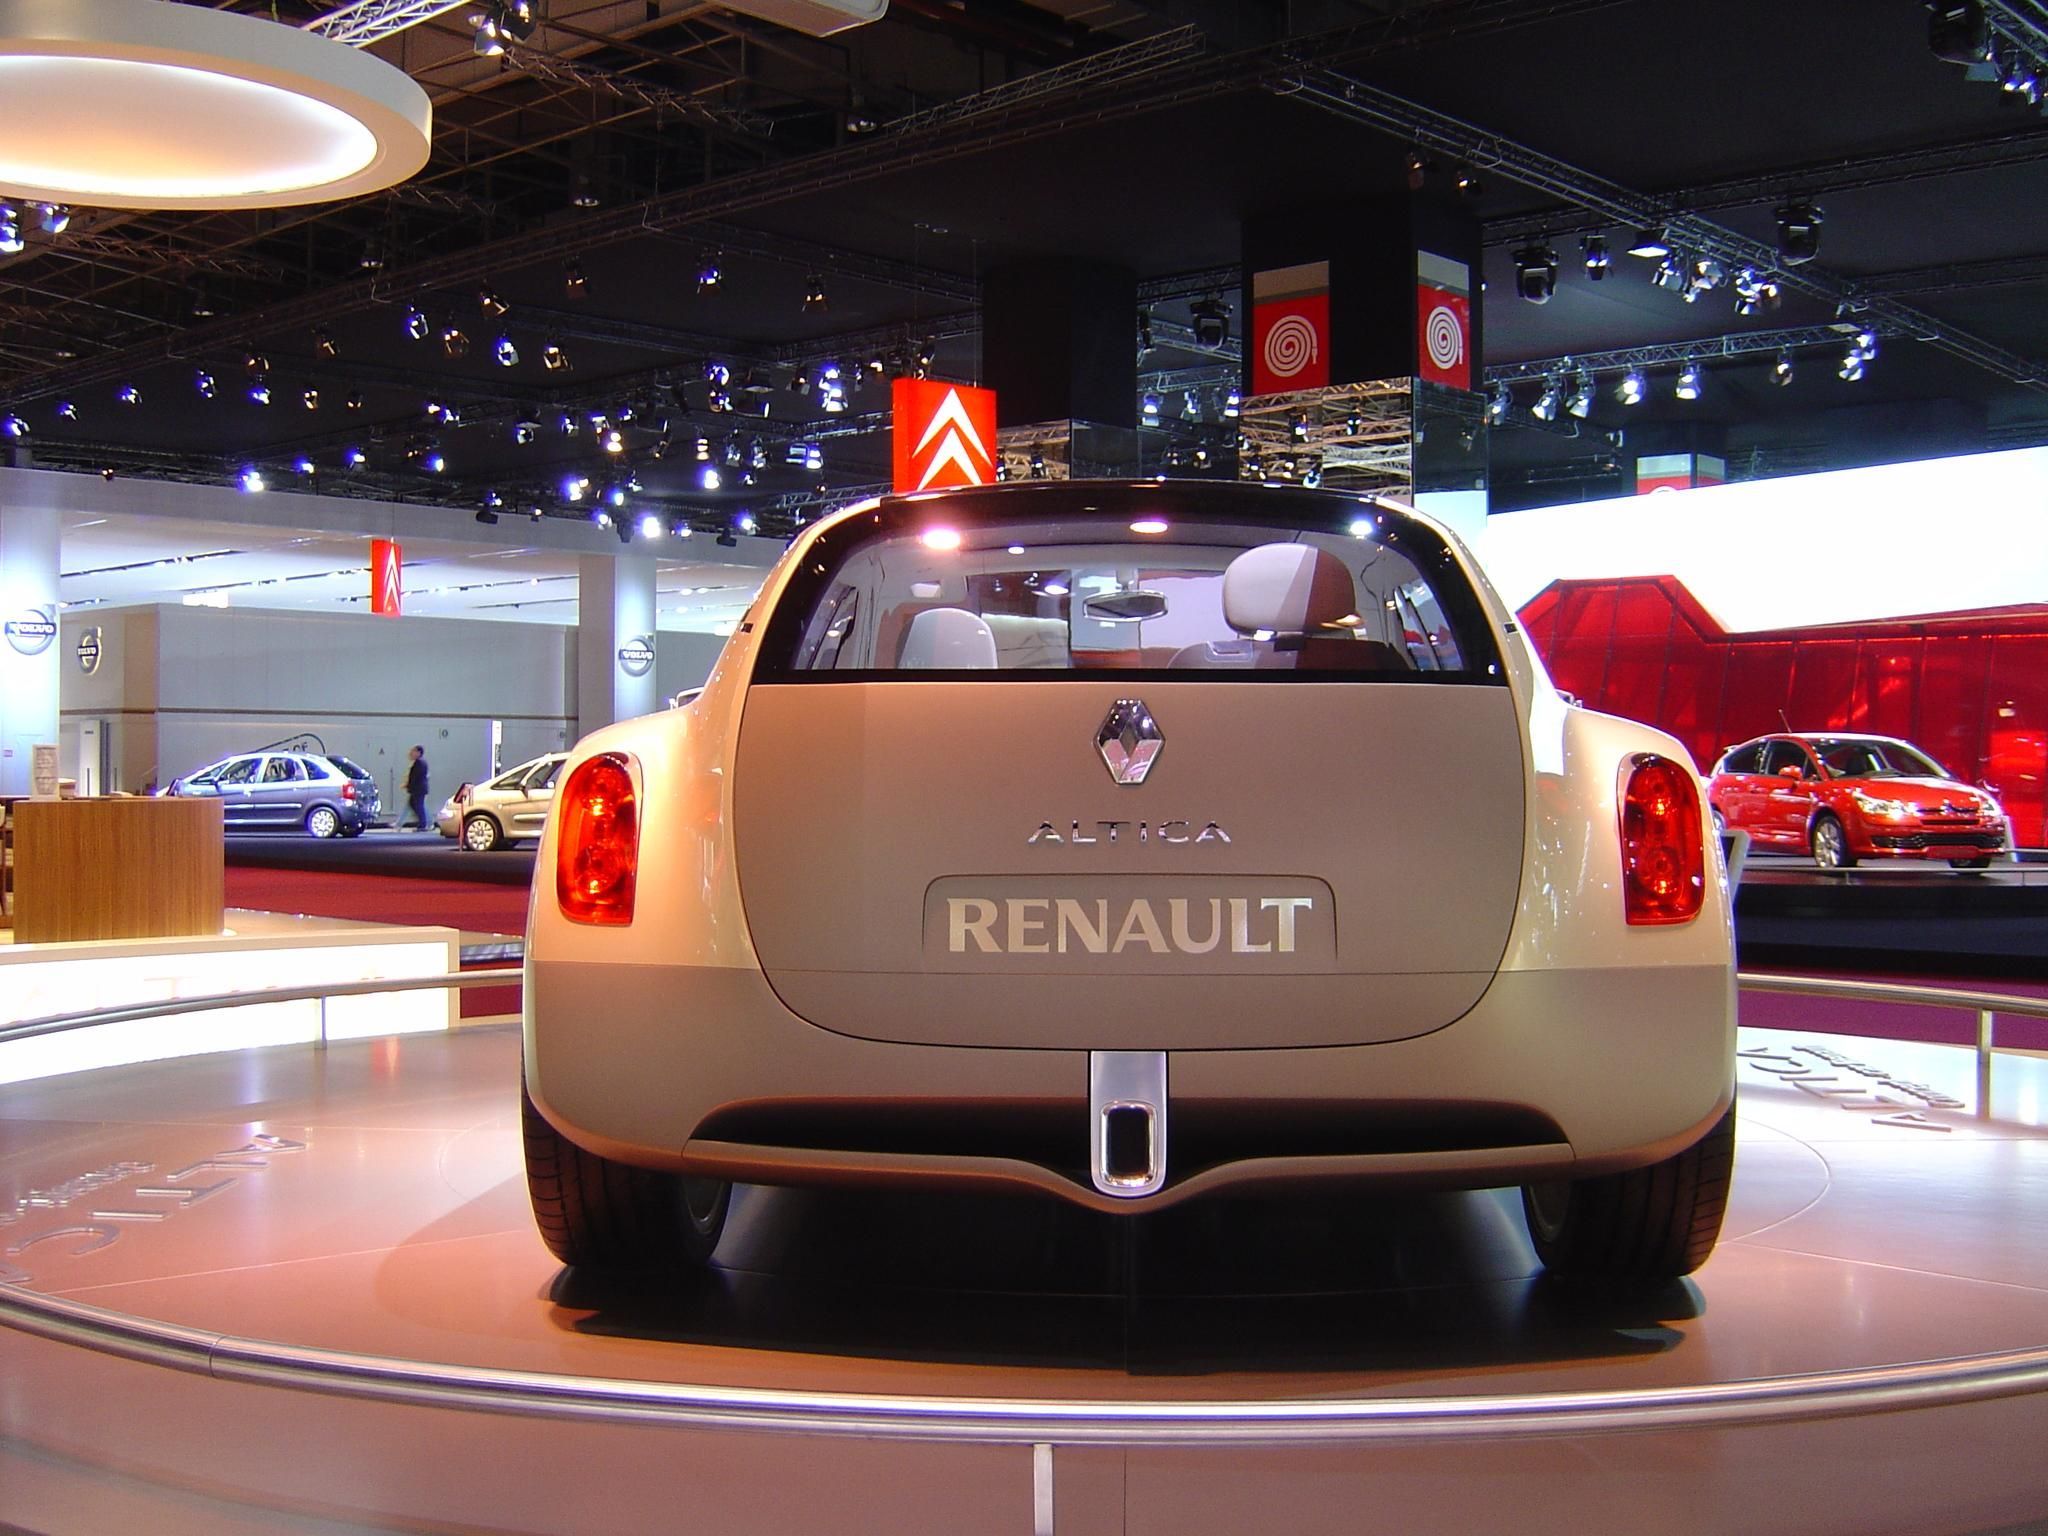 2006 Renault Altica